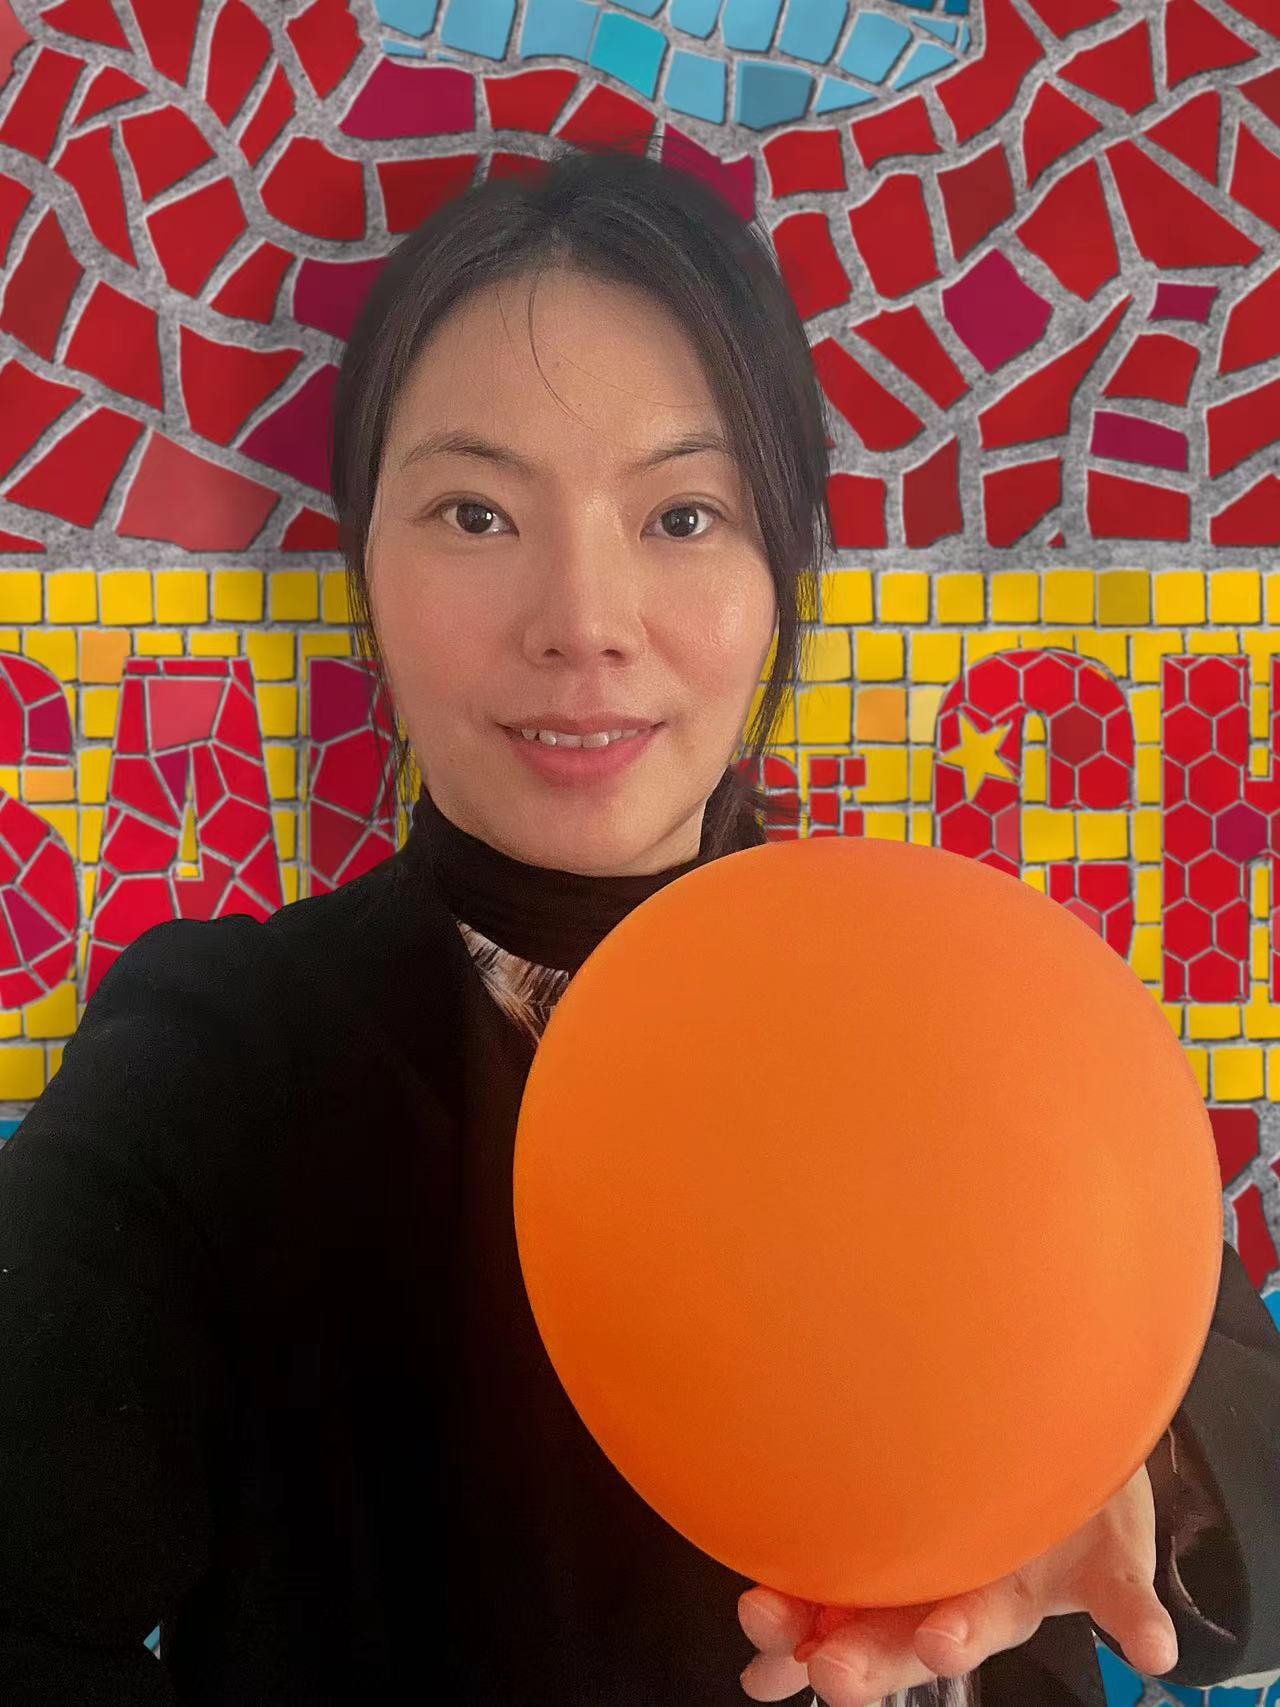 Elaine Huang's object: An orange balloon.